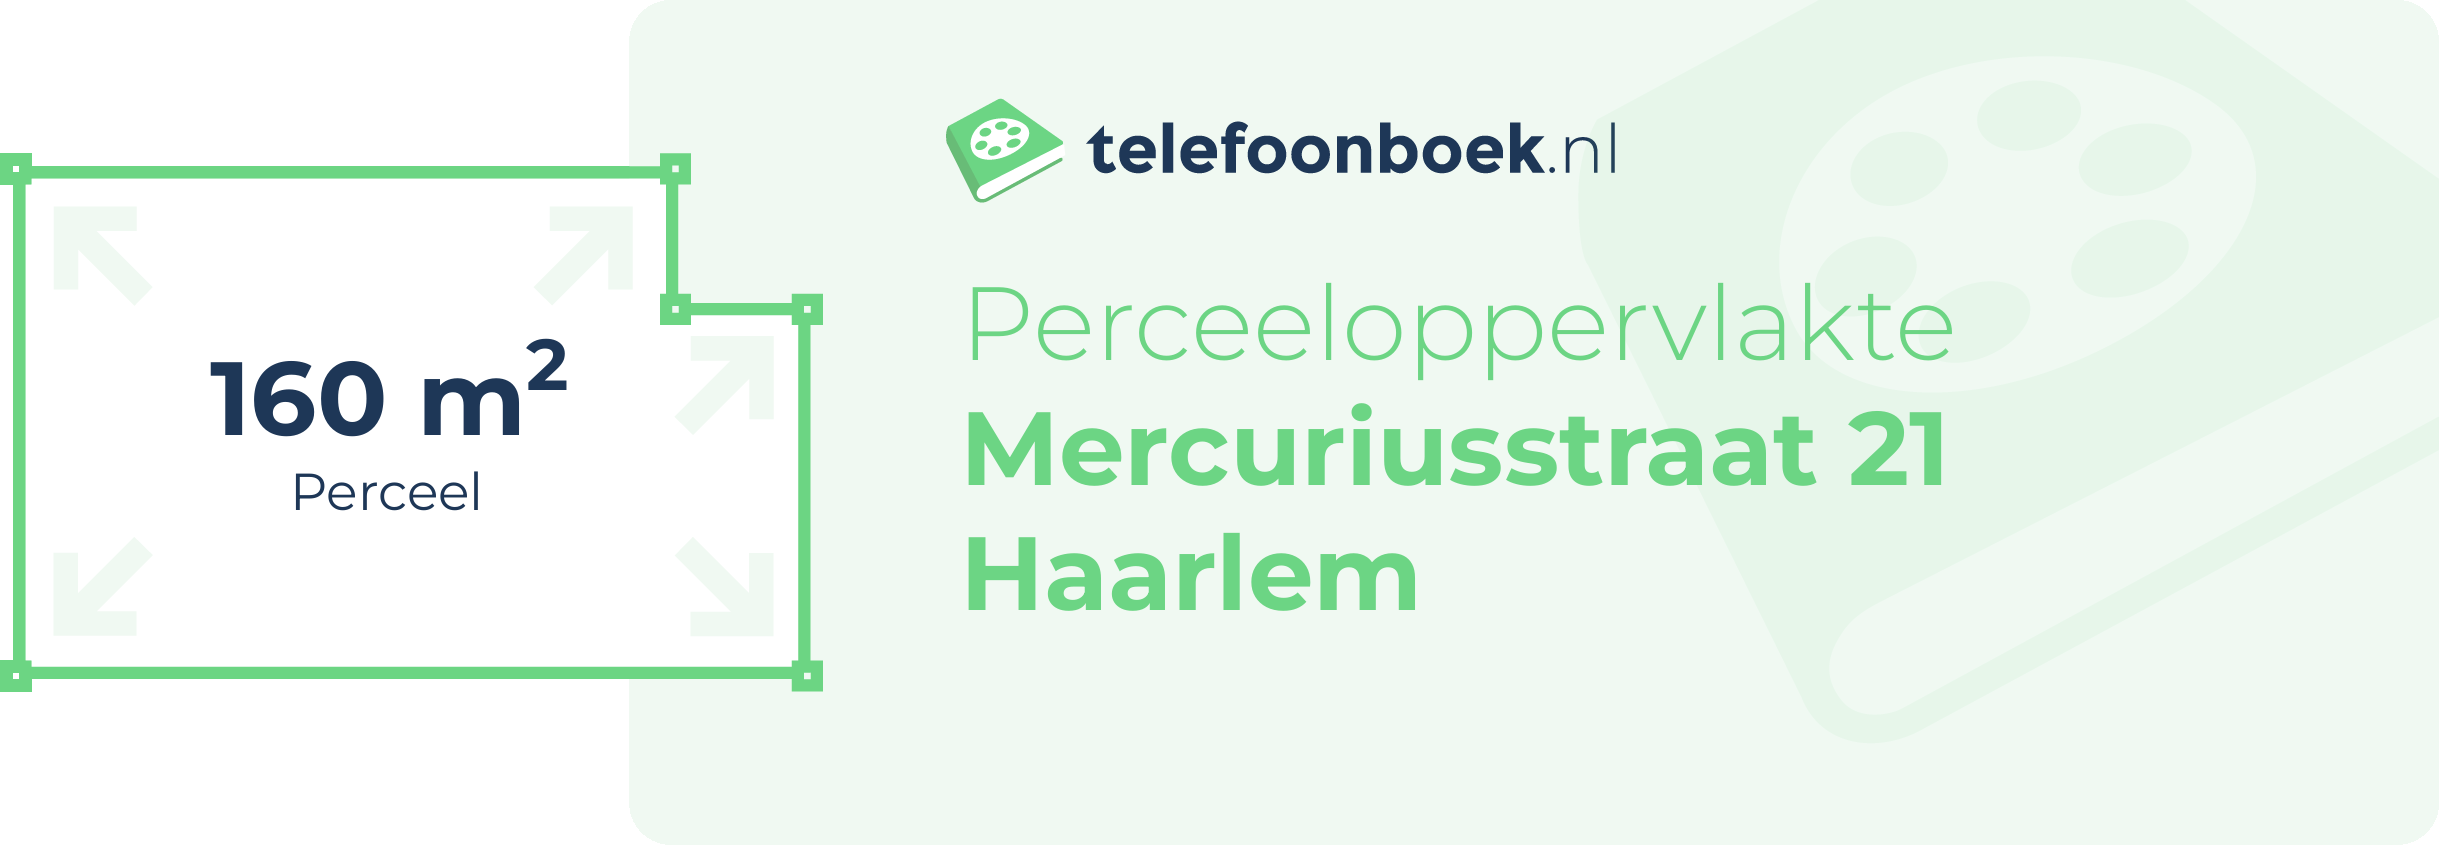 Perceeloppervlakte Mercuriusstraat 21 Haarlem